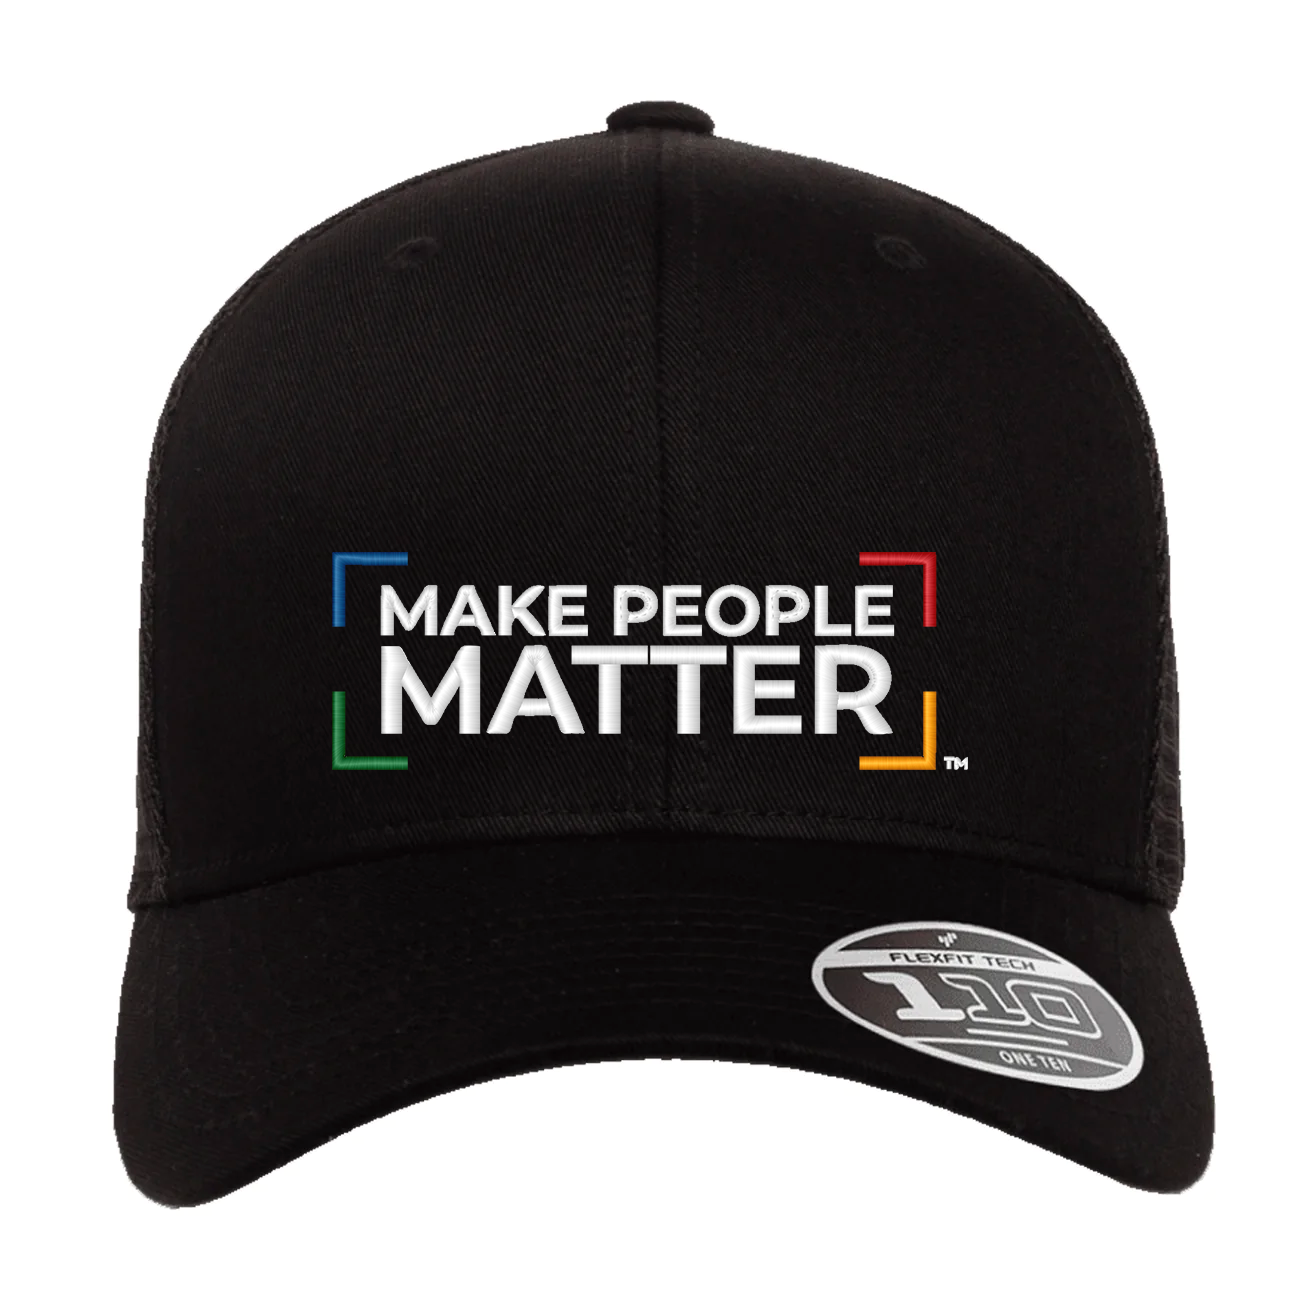 Make People Matter - FlexFit Solid Mesh Cap w/ Adjustable Snap